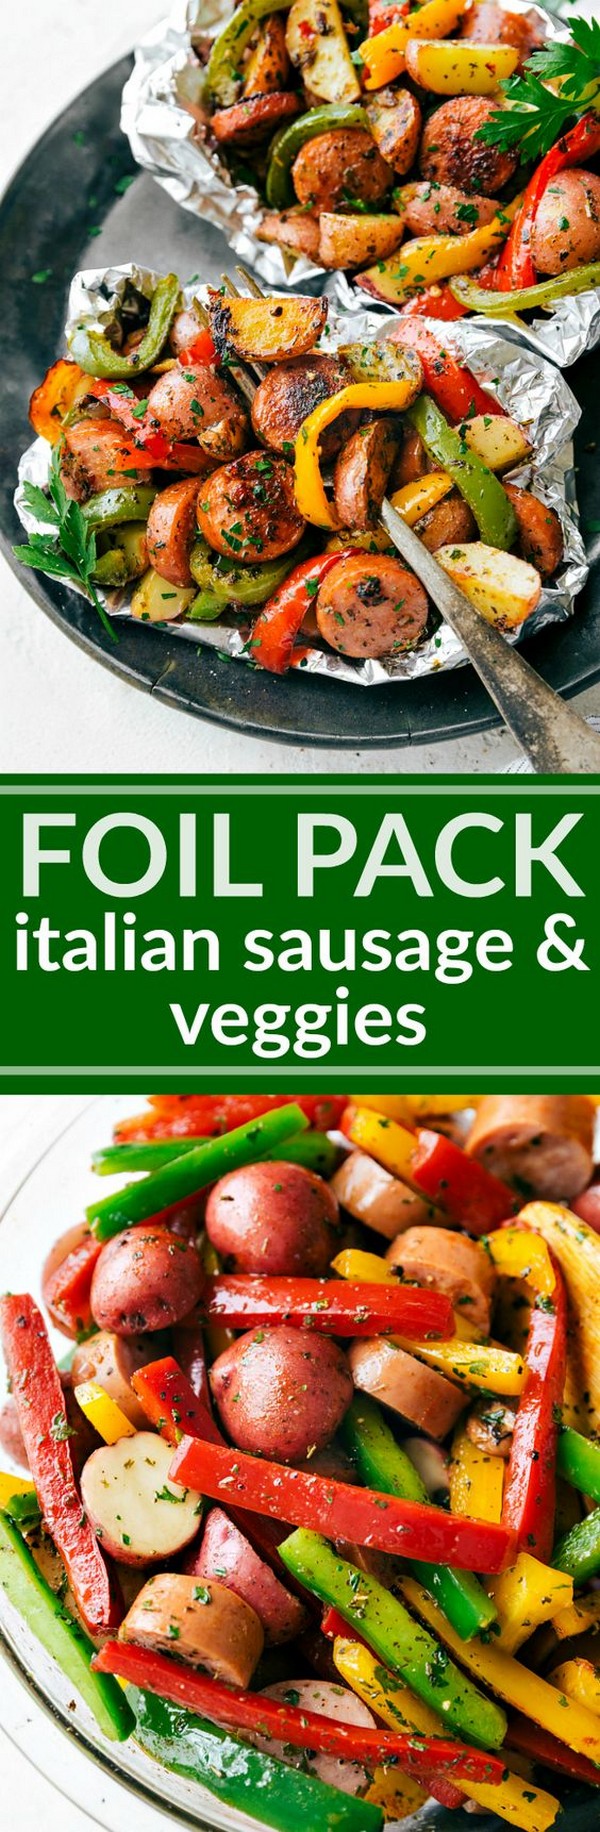 Foil Pack Italian Sausage And Veggies